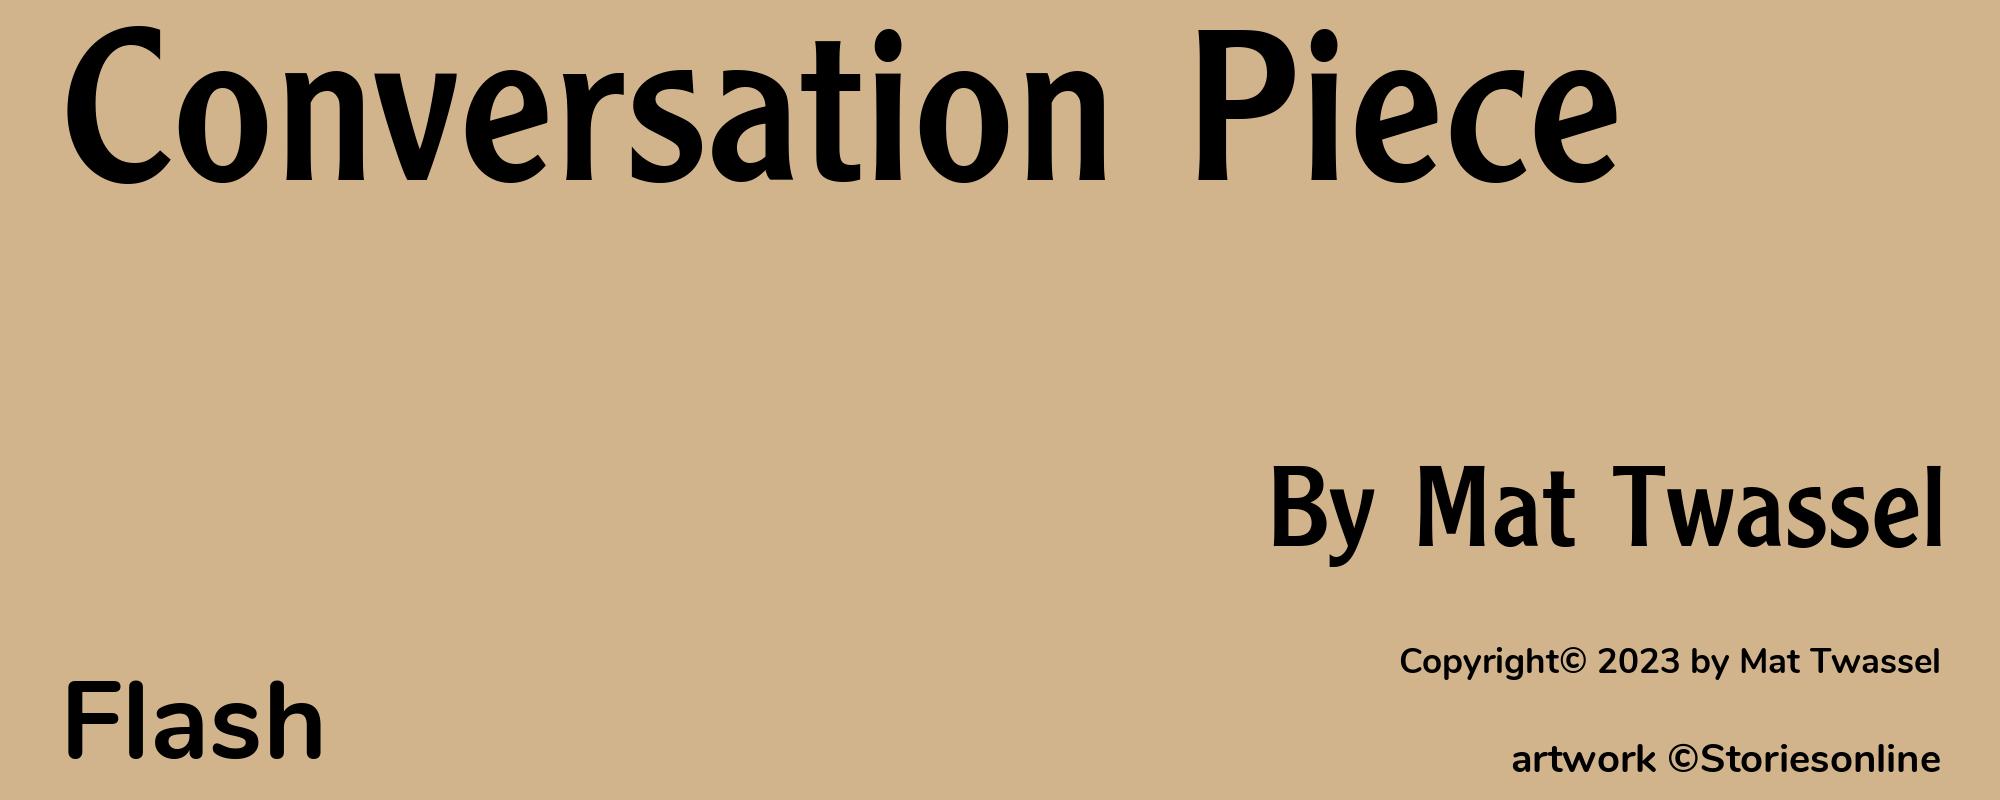 Conversation Piece - Cover